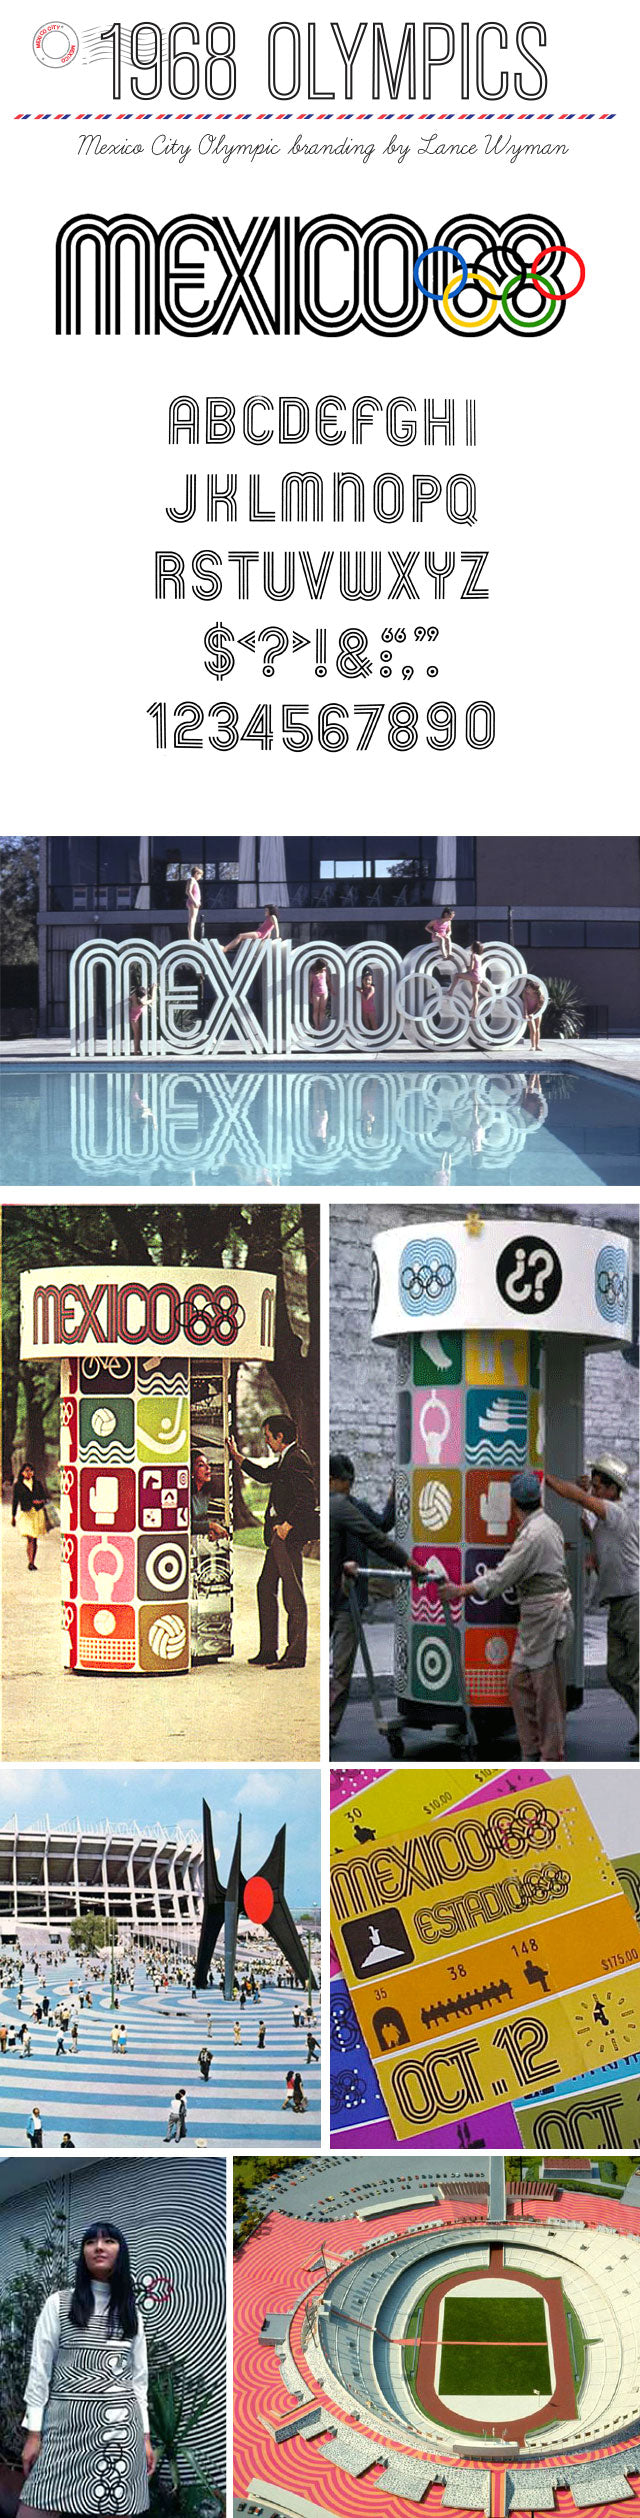 1968 mexico olympic branding graphic design